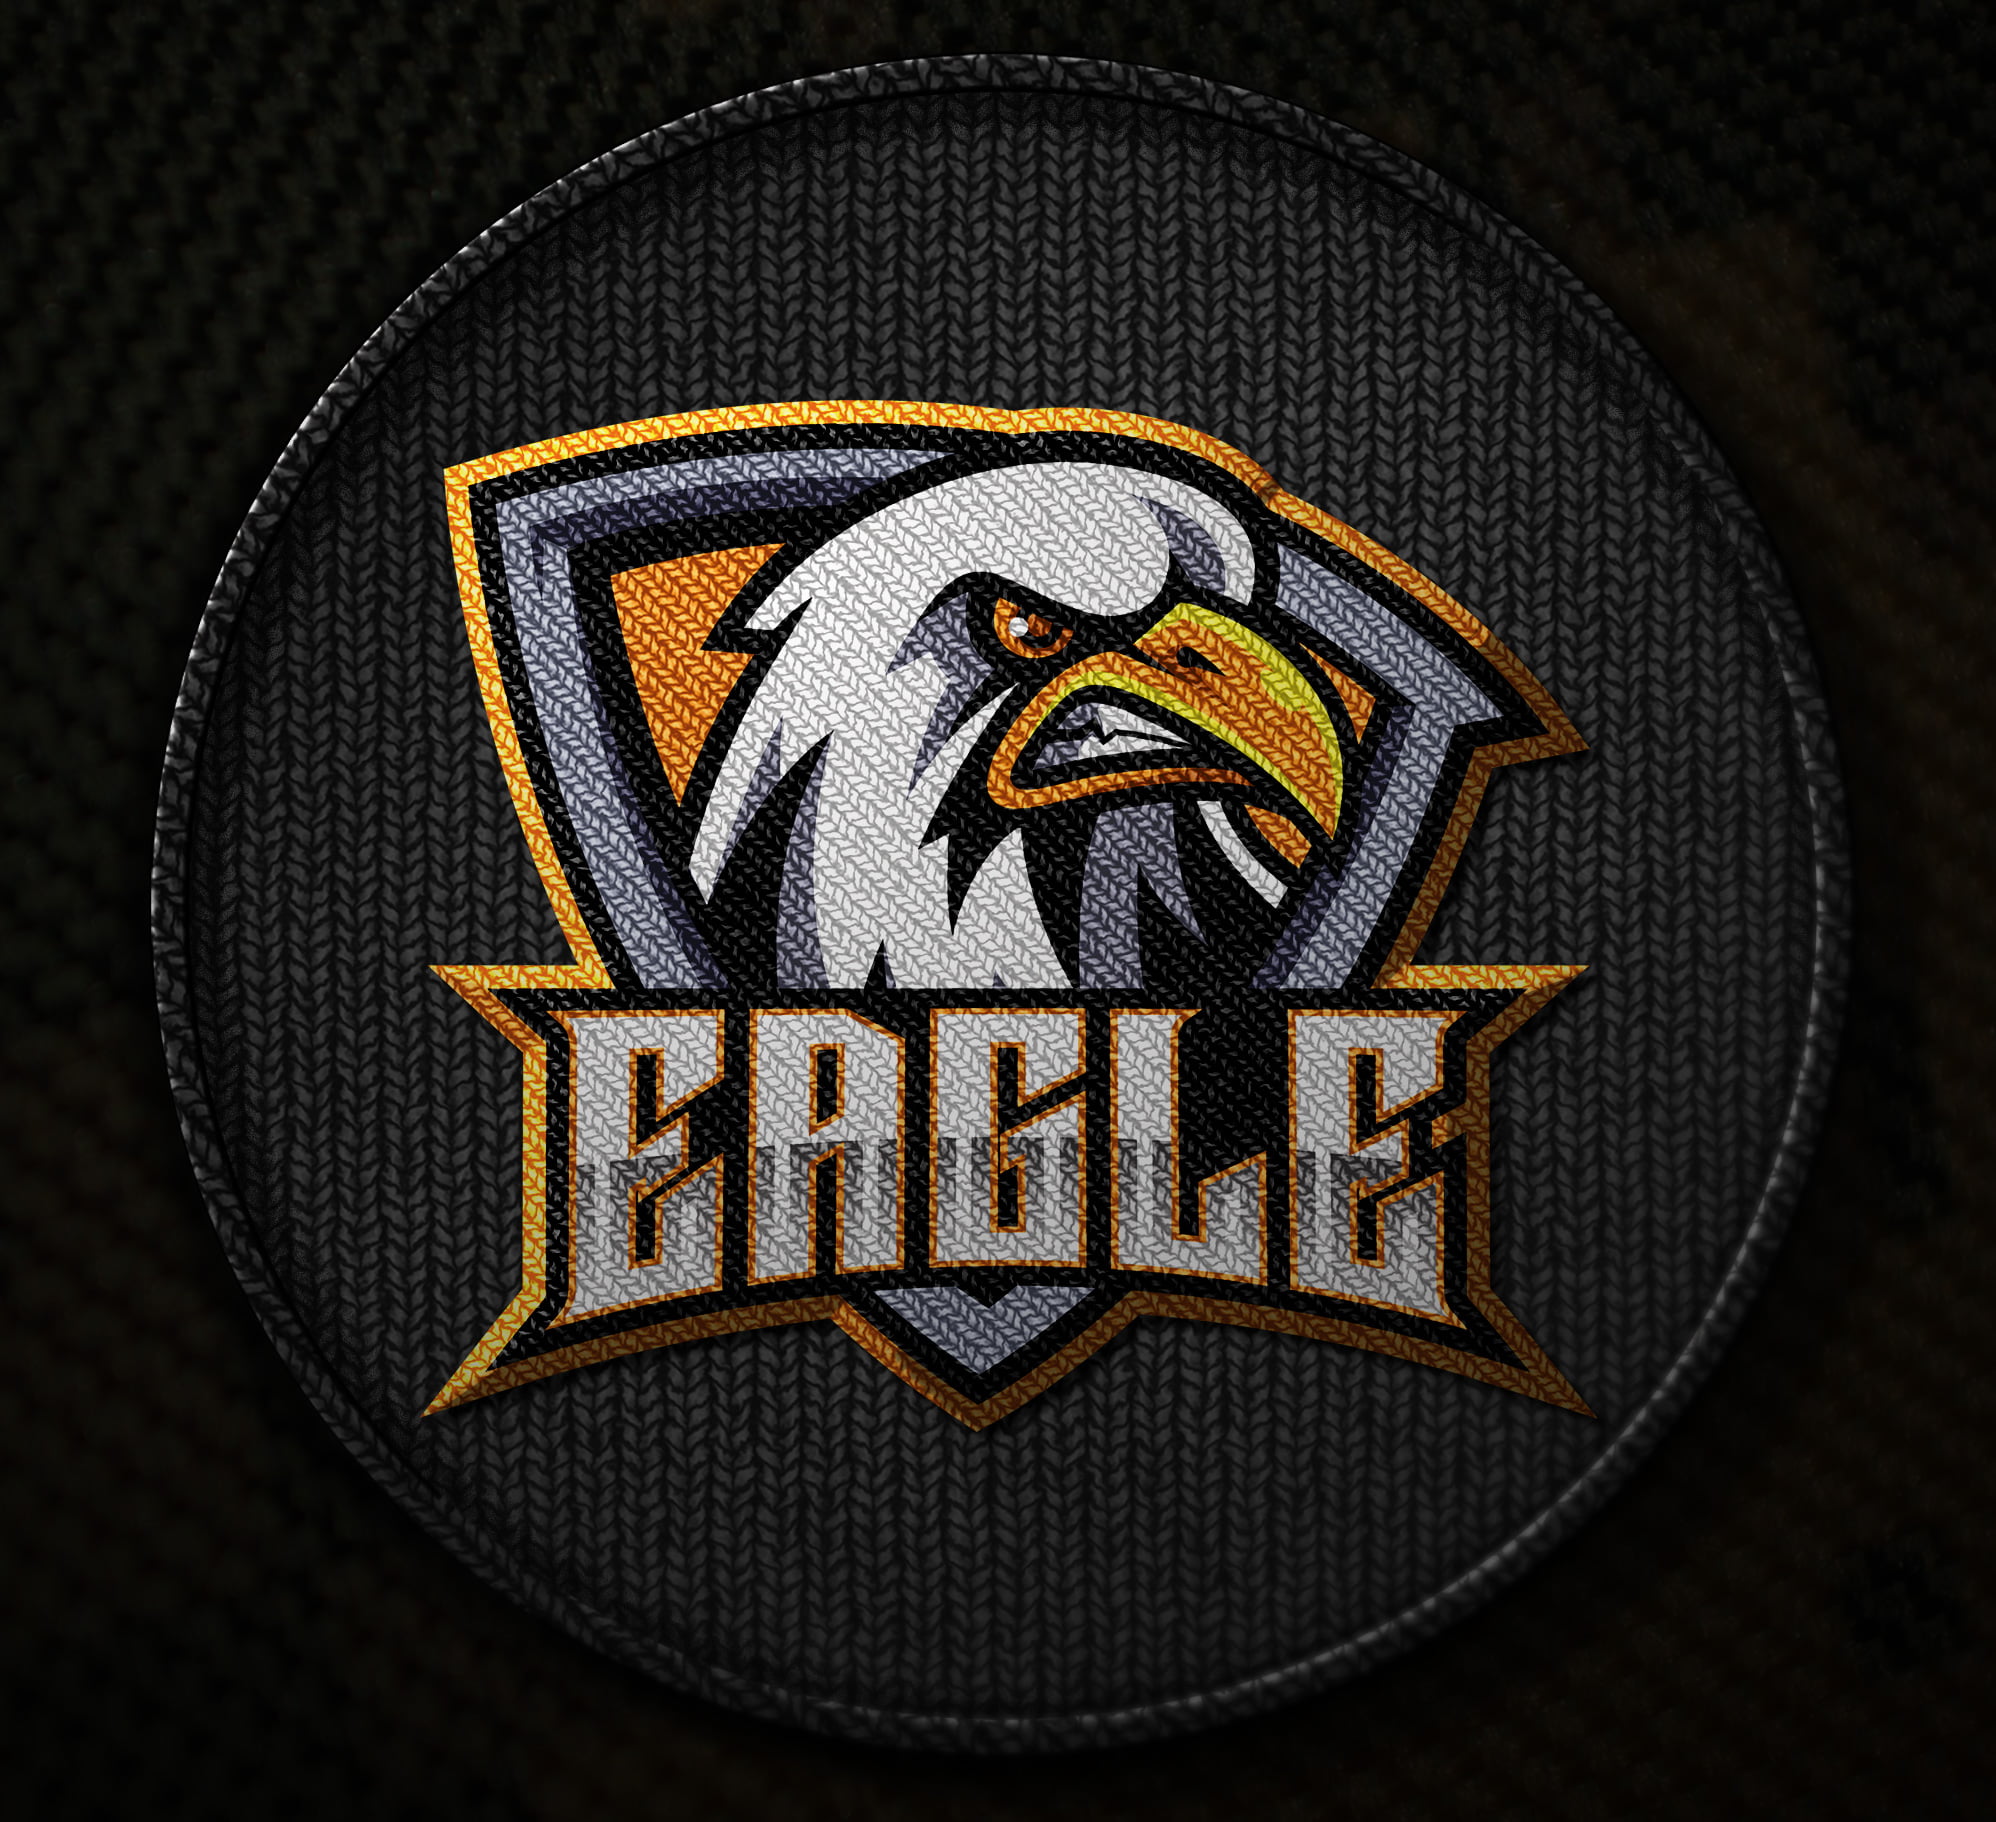 cool eagle logos